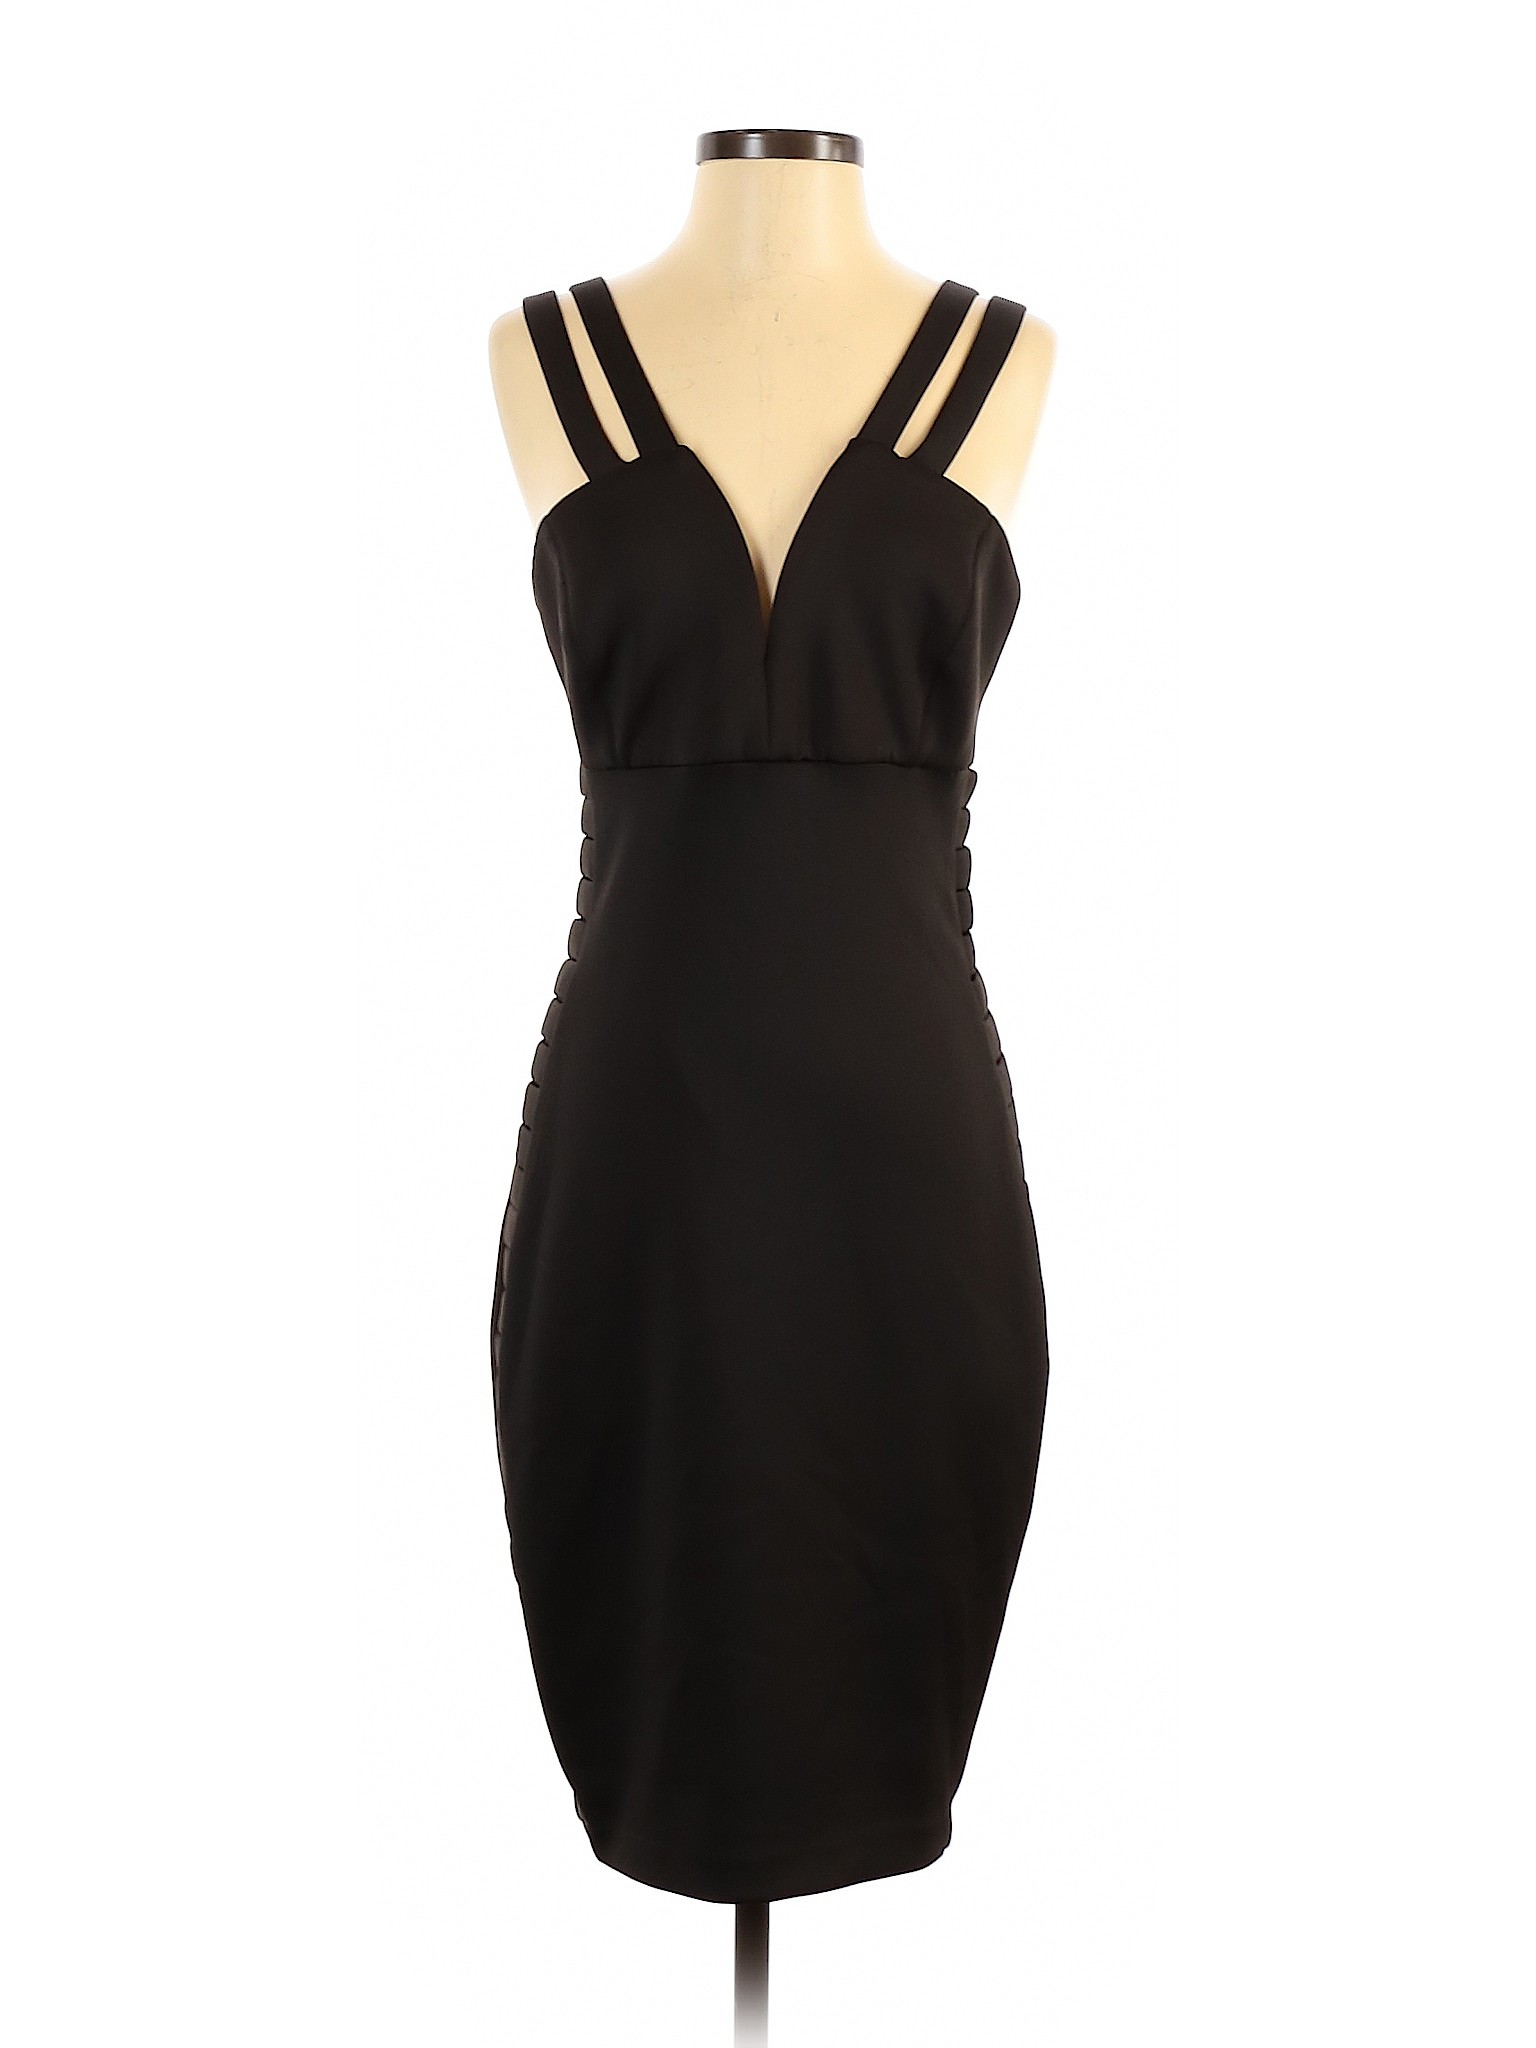 Guess Women Black Cocktail Dress 8 | eBay